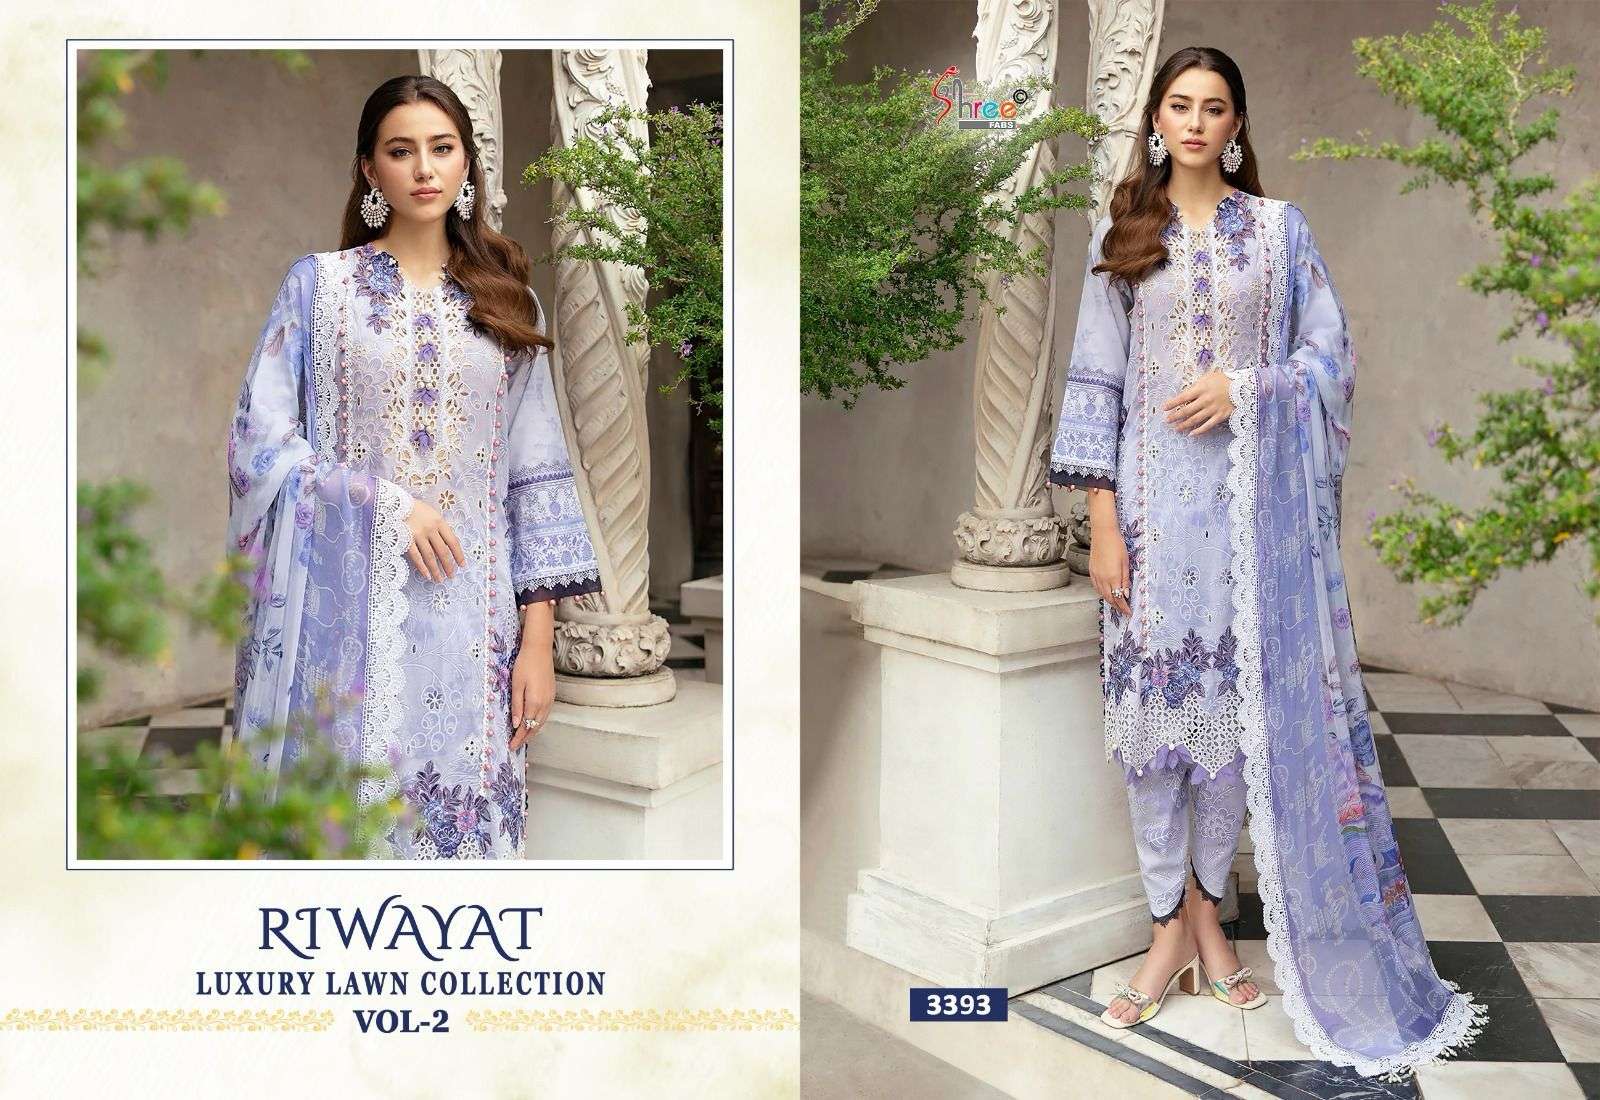 shree fabs riwayat luxury lawn collection vol-2 3390-3396 series designer wedding special pakistani suit wholesaler surat gujarat